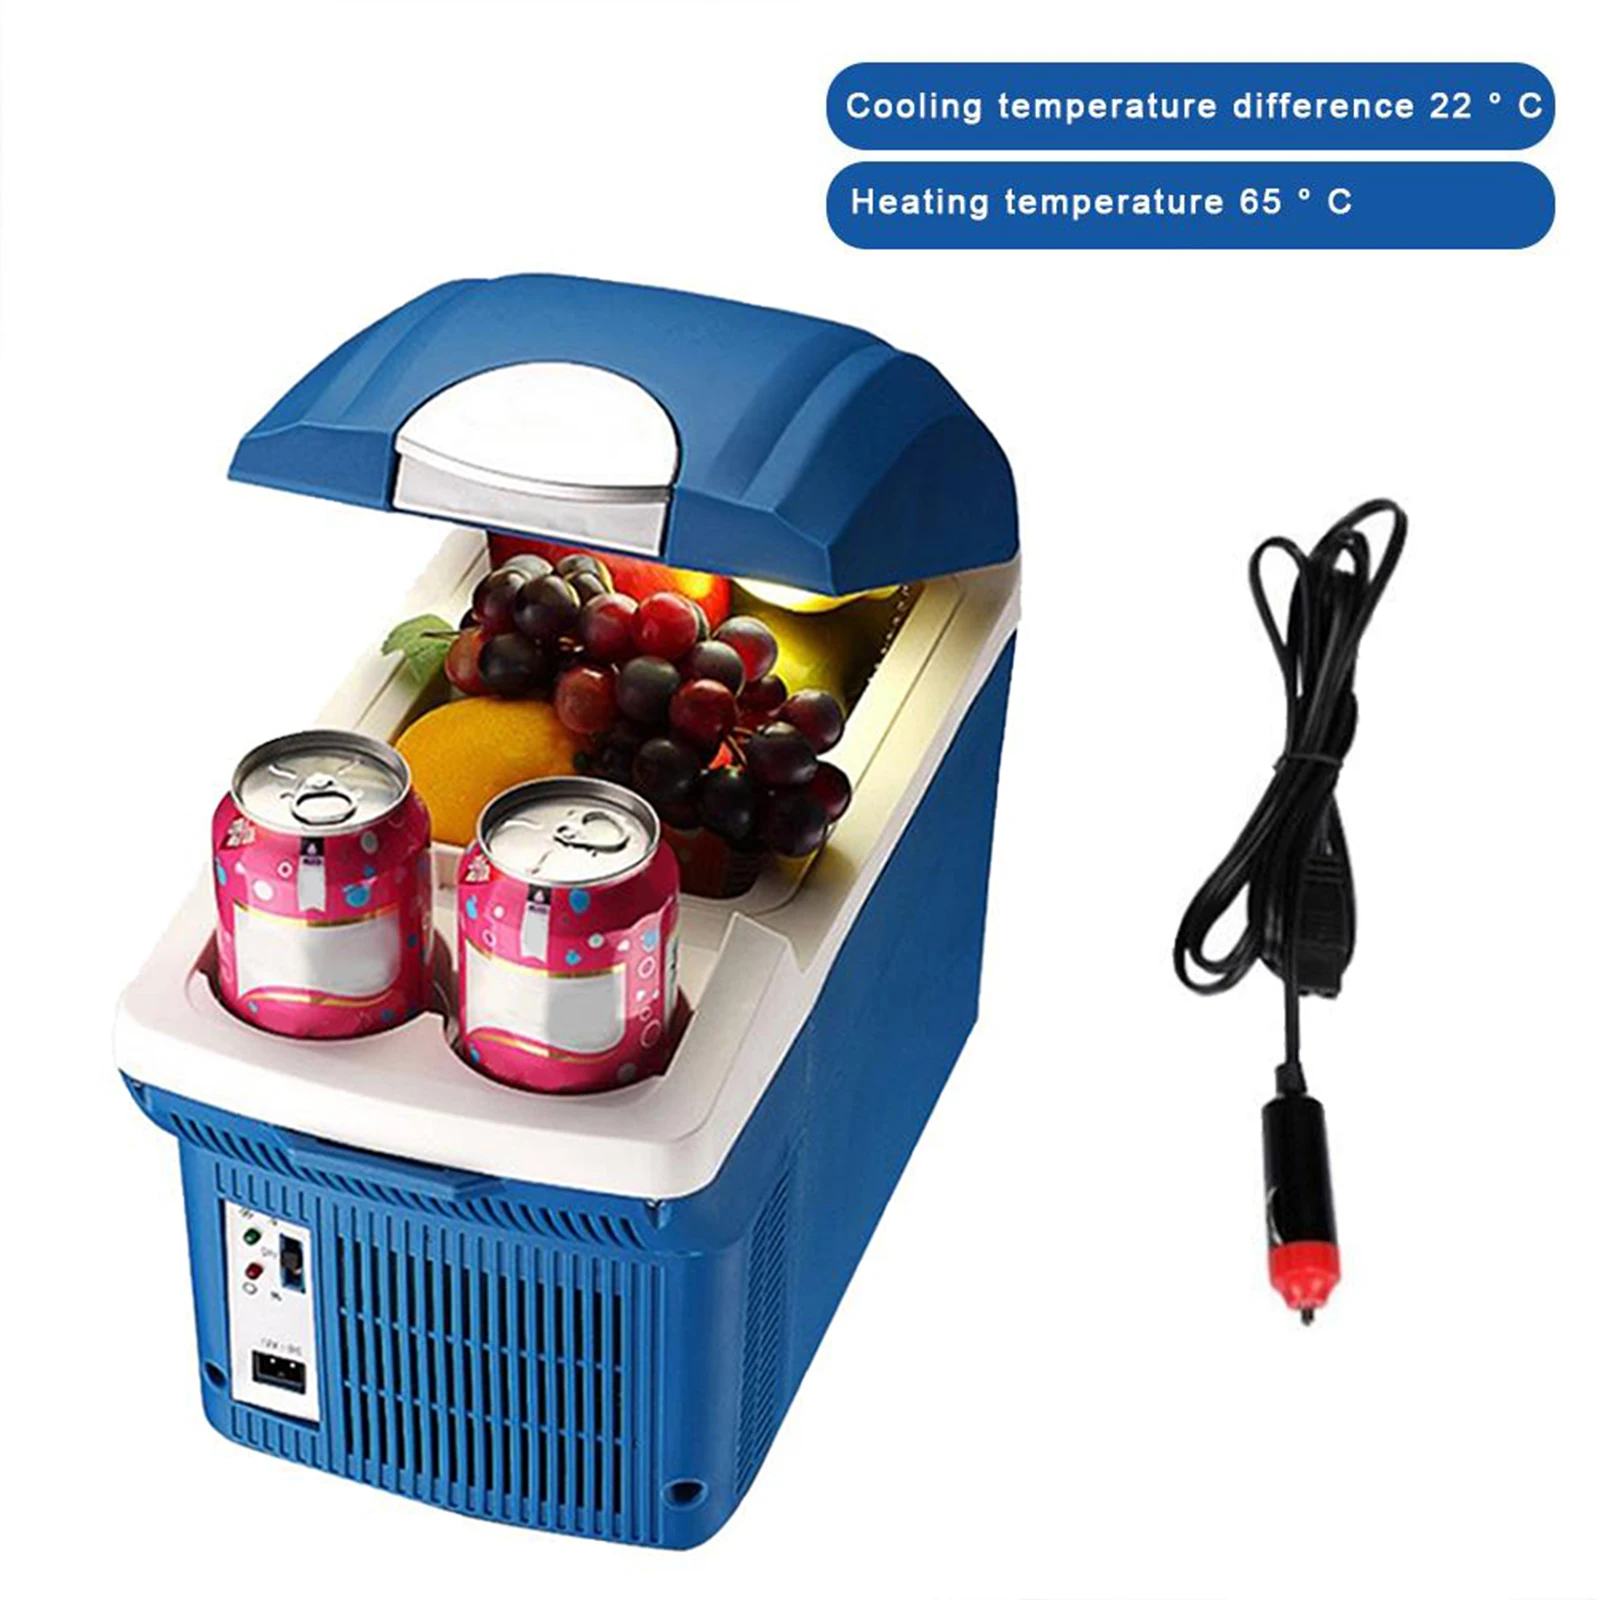 8L 12V Portable Car Fridge Cooler Car Refrigerator Refrigerator In The Car Outdoor Camping Ice Refrigerator Travel